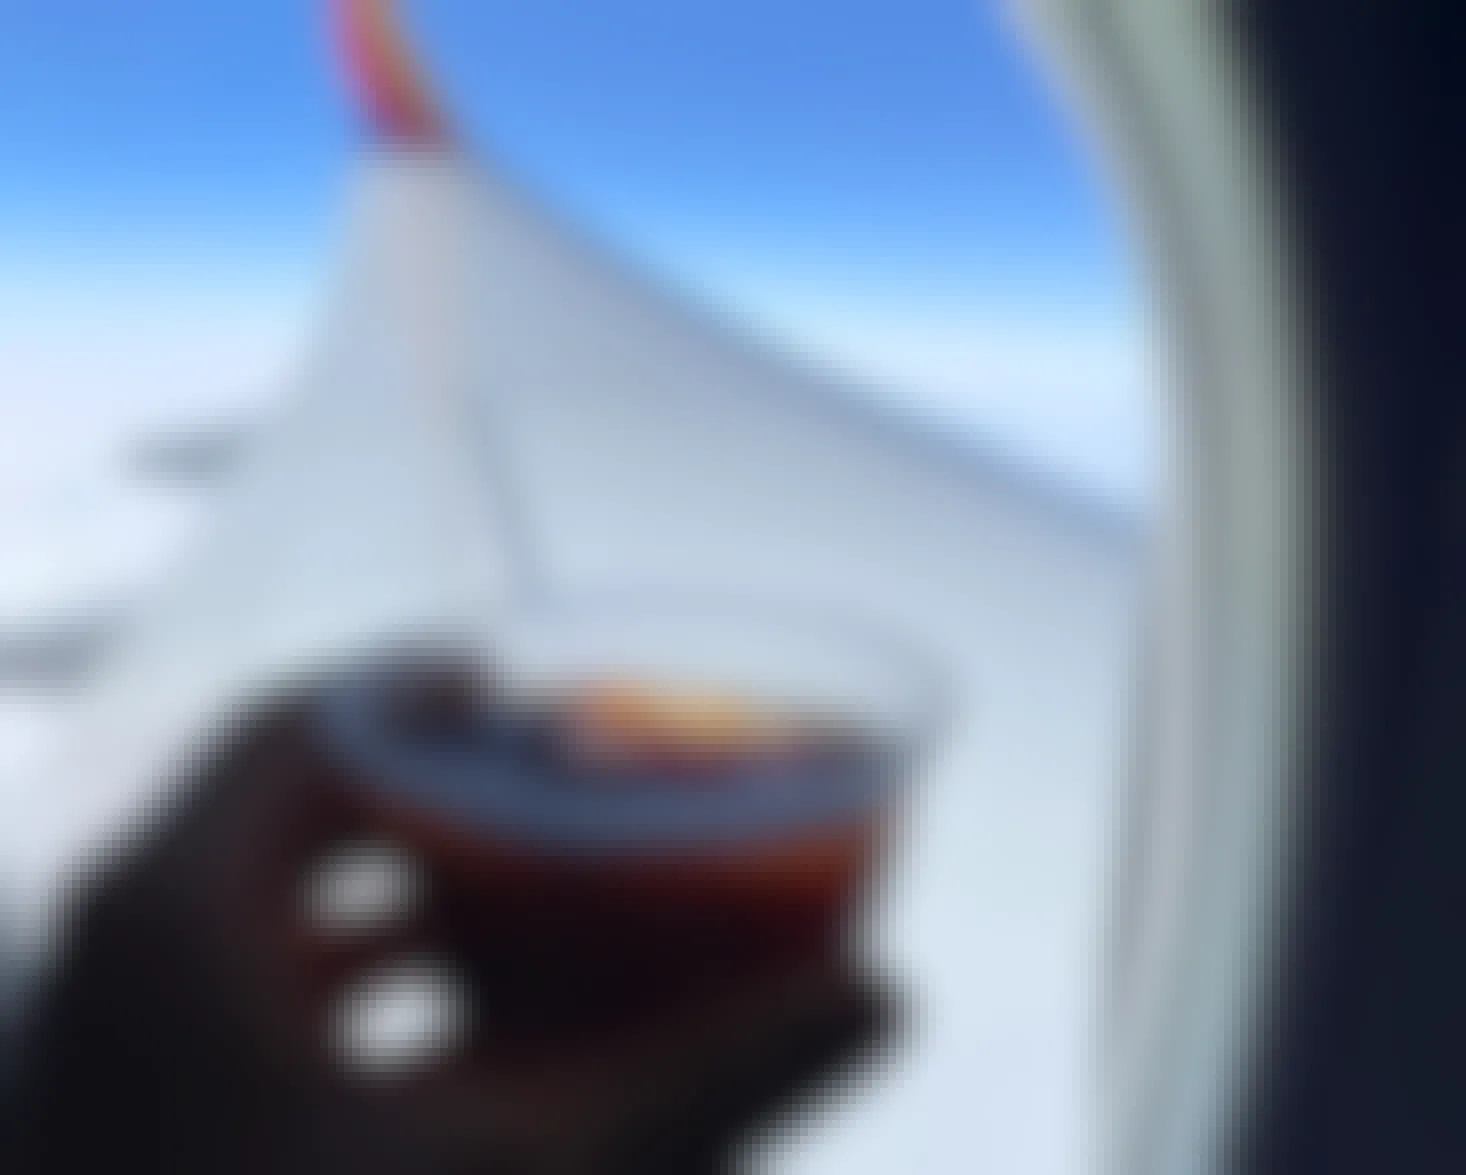 hand holding a mixed drink on Southwest flight near window